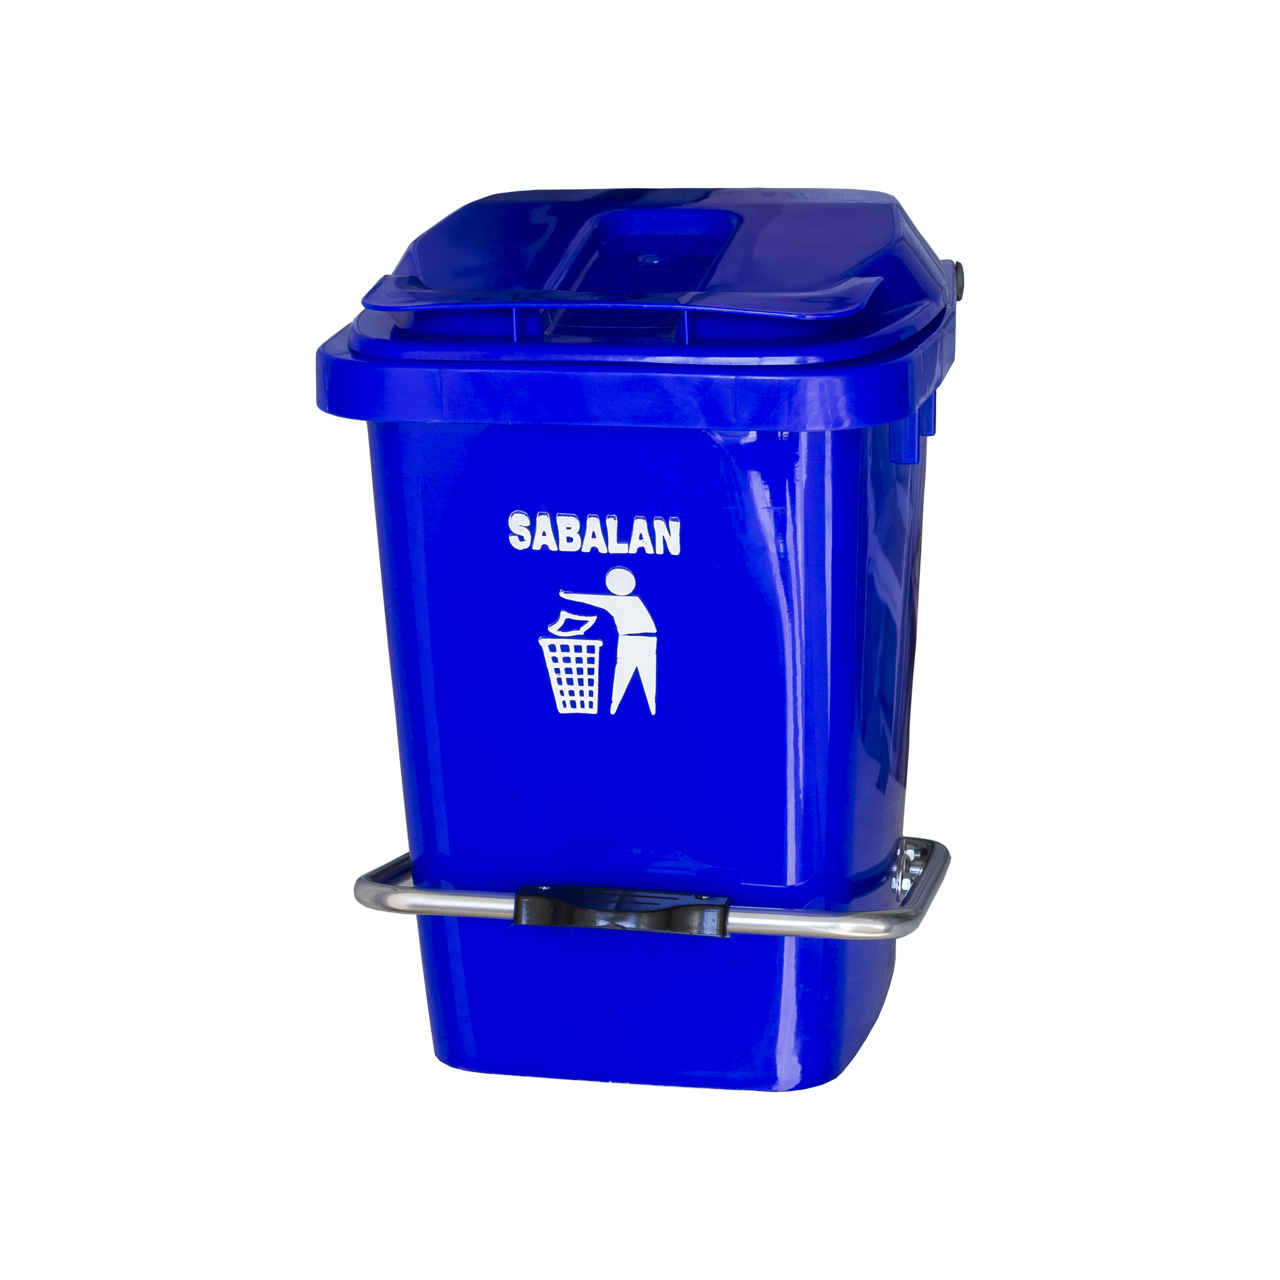 سطل زباله صنعتی سبلان کد 362440 حجم 20 لیتری